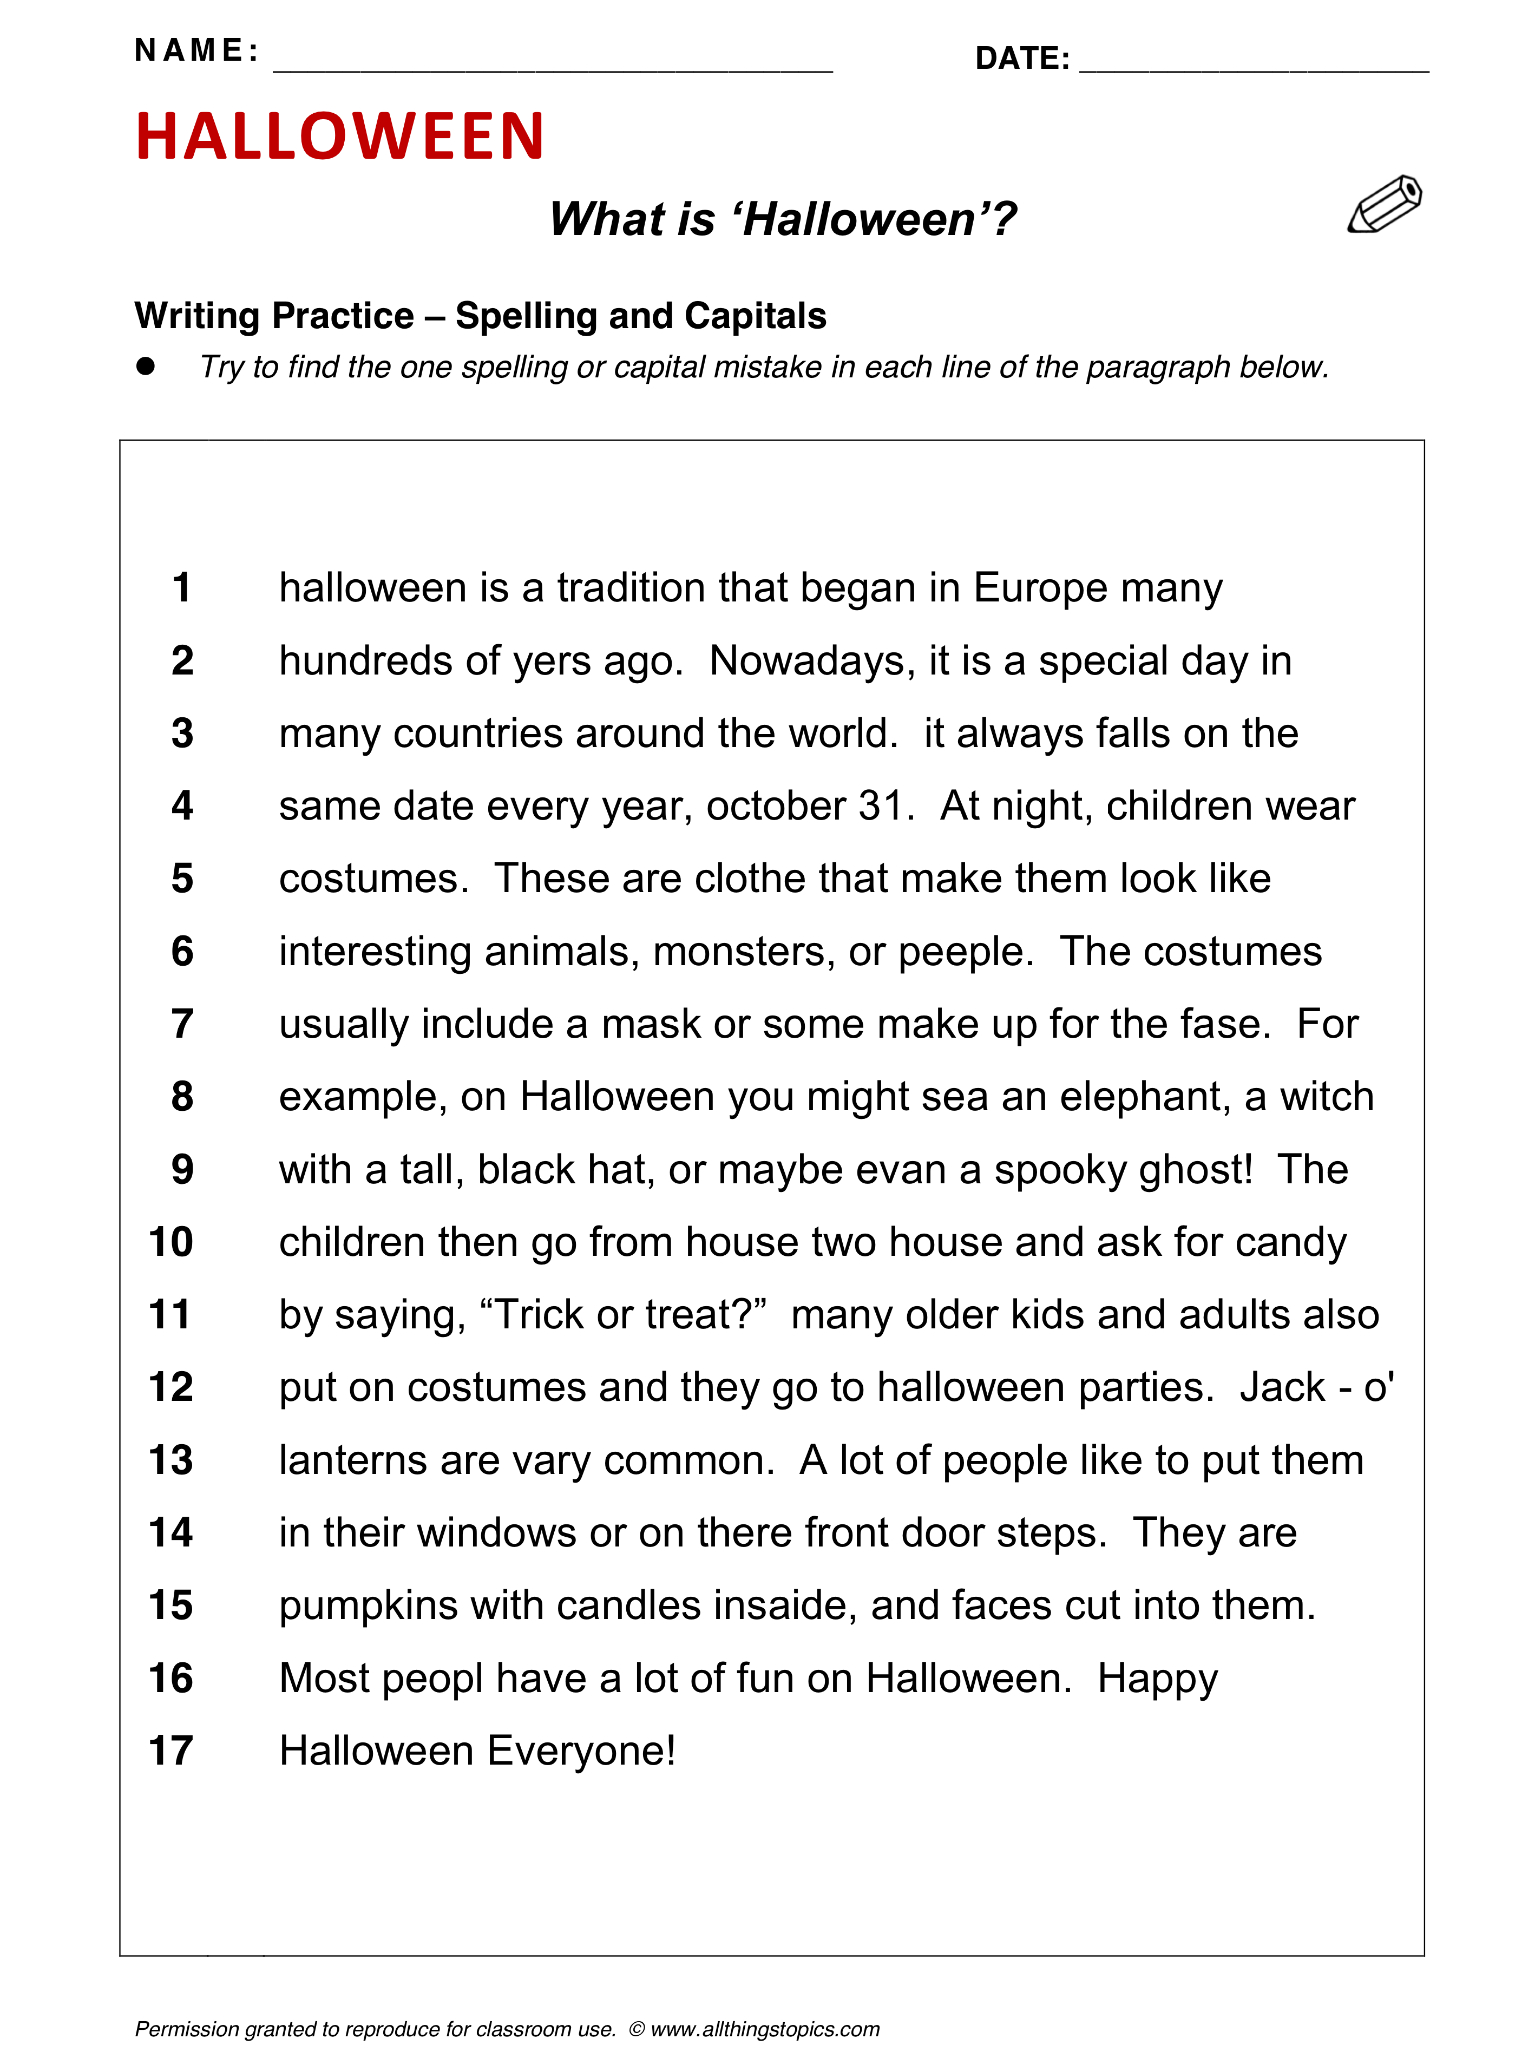 Halloween, English, Learning English, Vocabulary, Esl über Arbeitsblatt Halloween Englisch